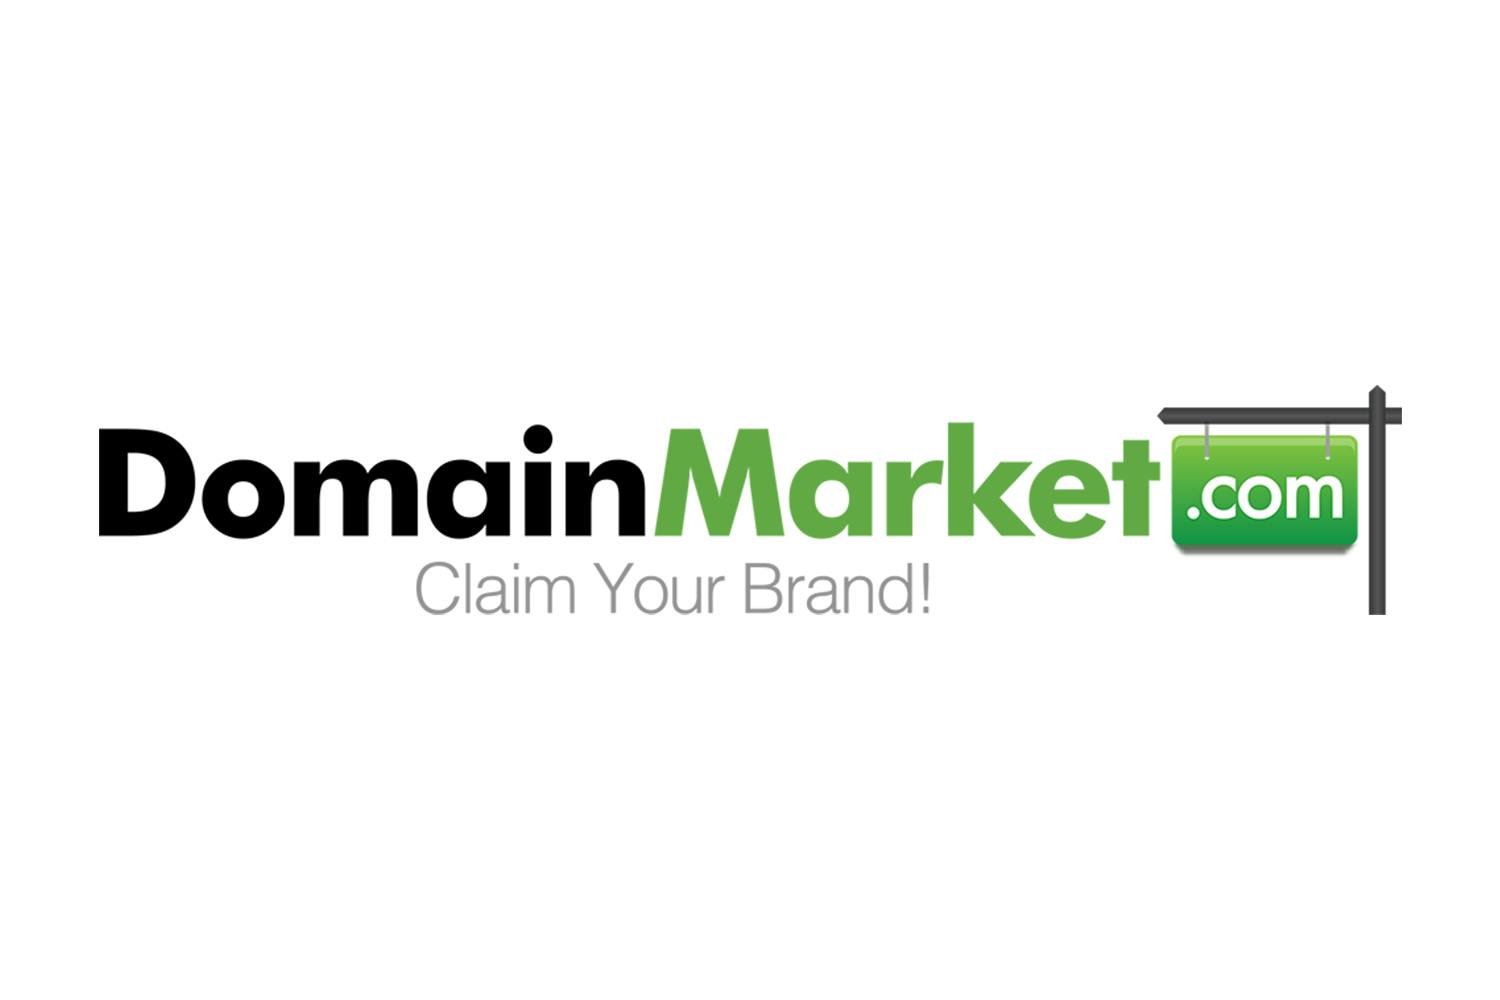 (c) Domainmarket.com